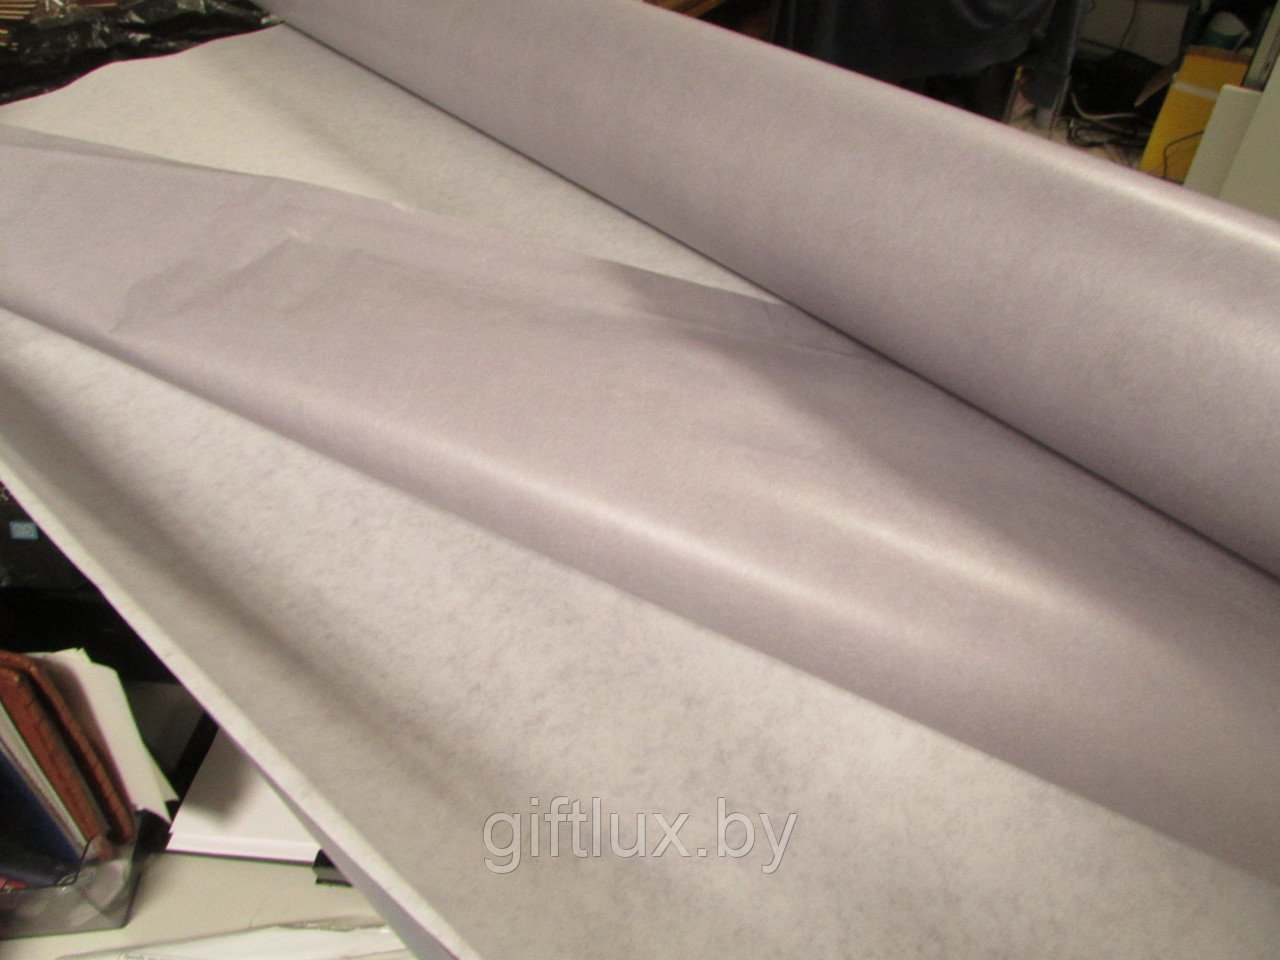 Бумага крафт Однотон 75 см * 100 см (40 гр) серебристо-серый